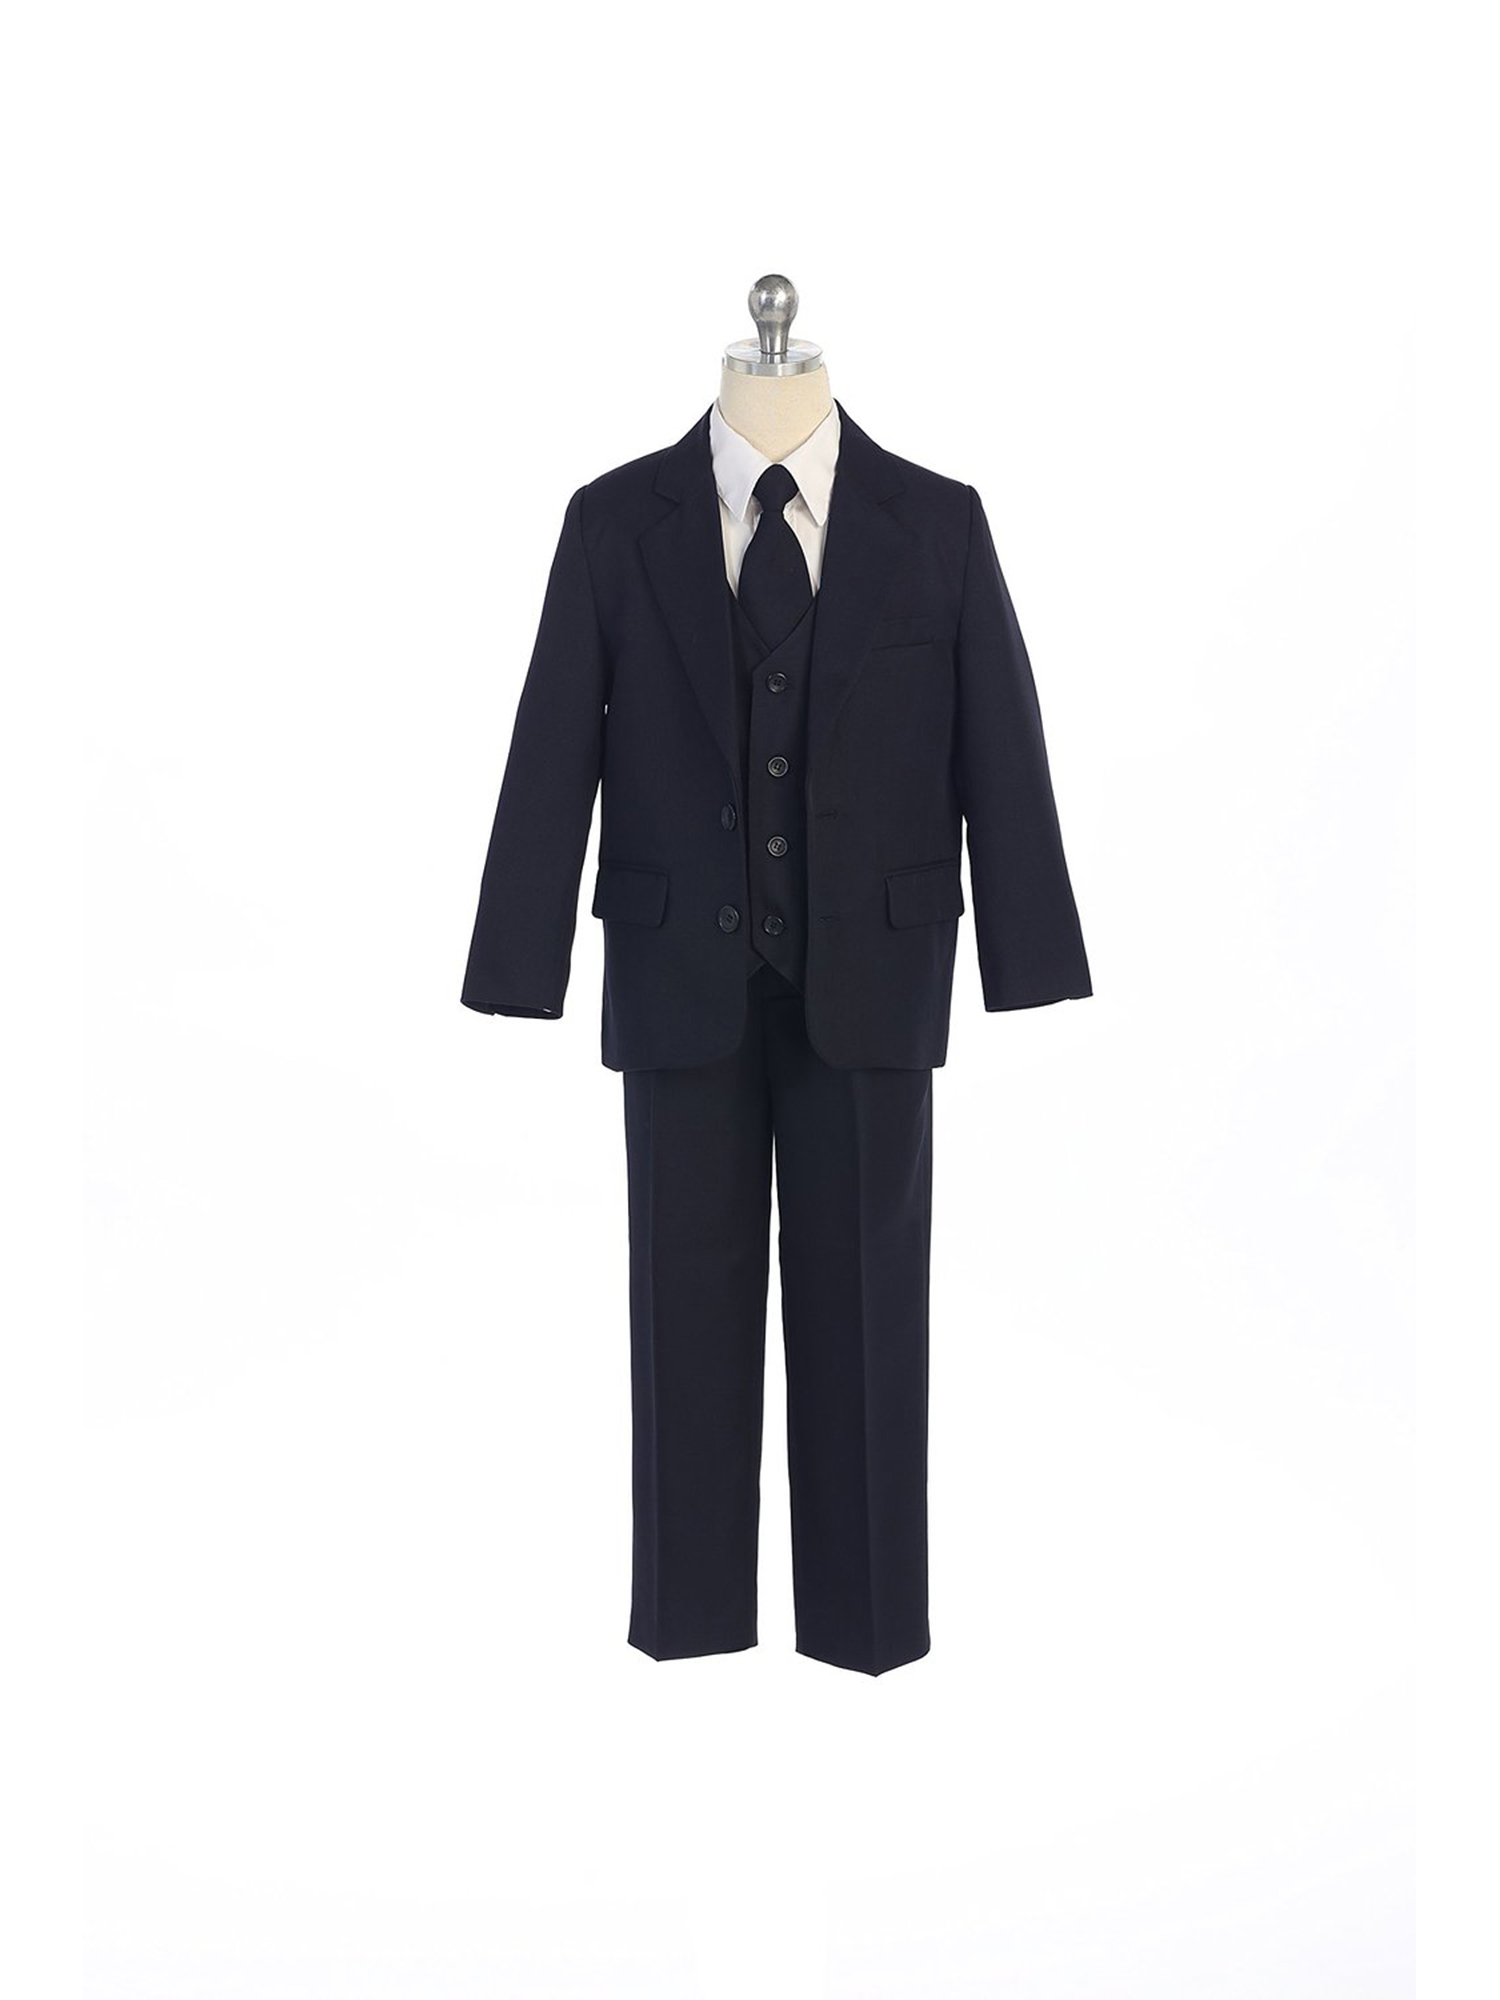 COLE Boys Suit with Shirt and Vest (5-Piece) - (20 Husky, Navy Blue)